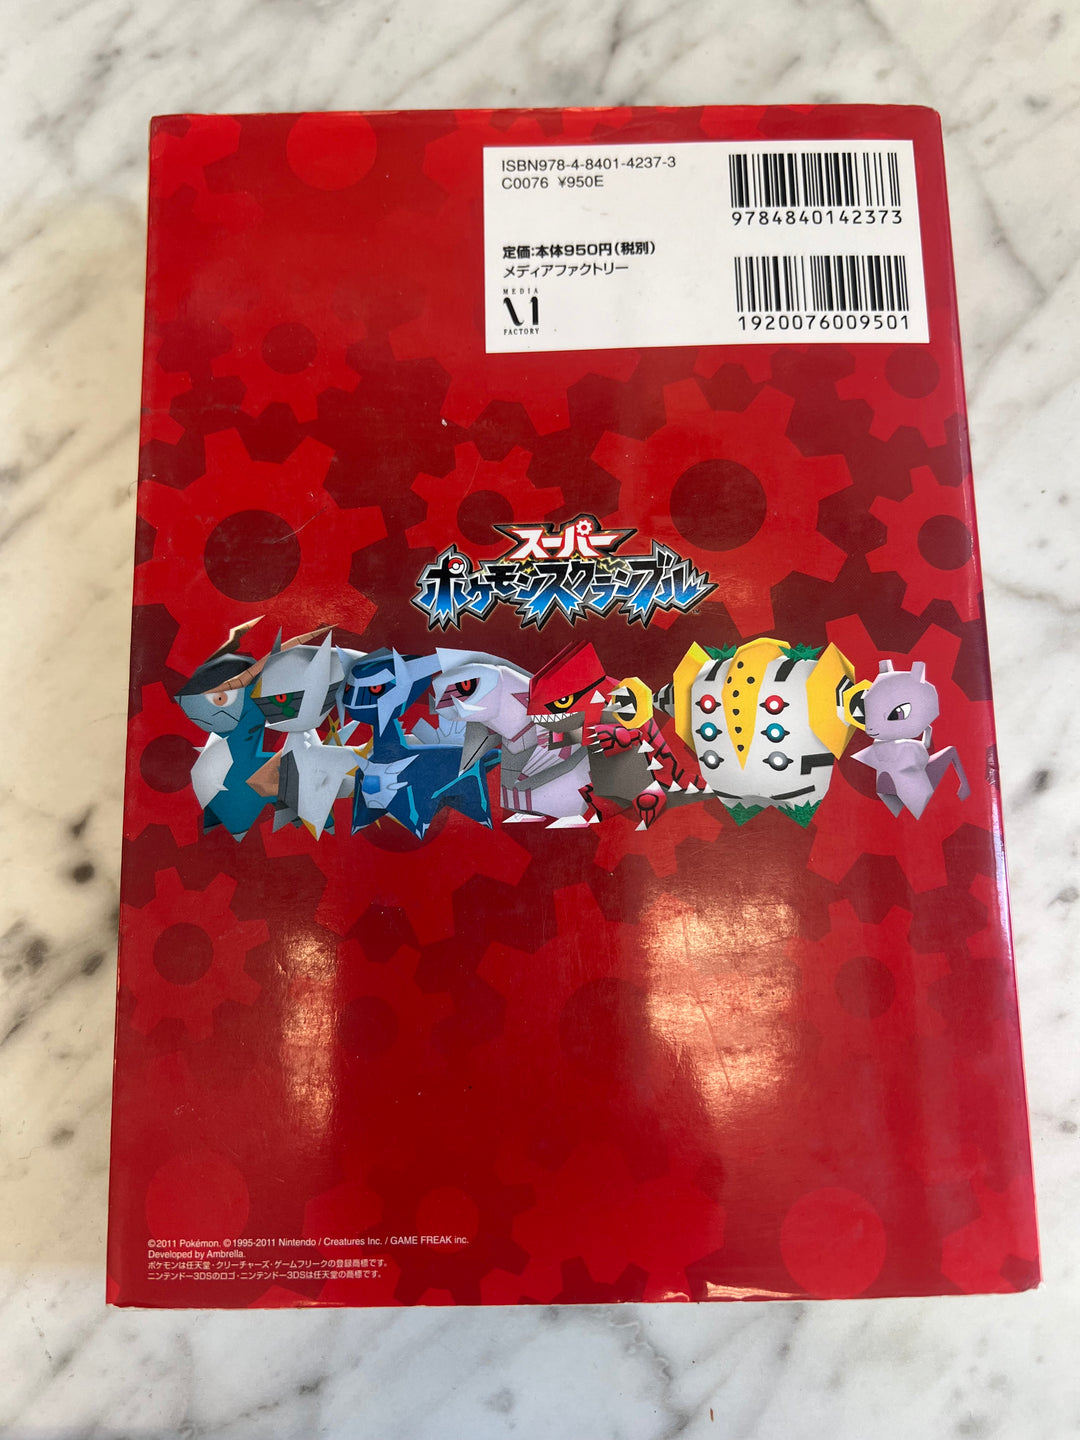 Super Pokemon Scramble Official Complete Clear Guide (Media Factory Pokemon Guide) DU62524